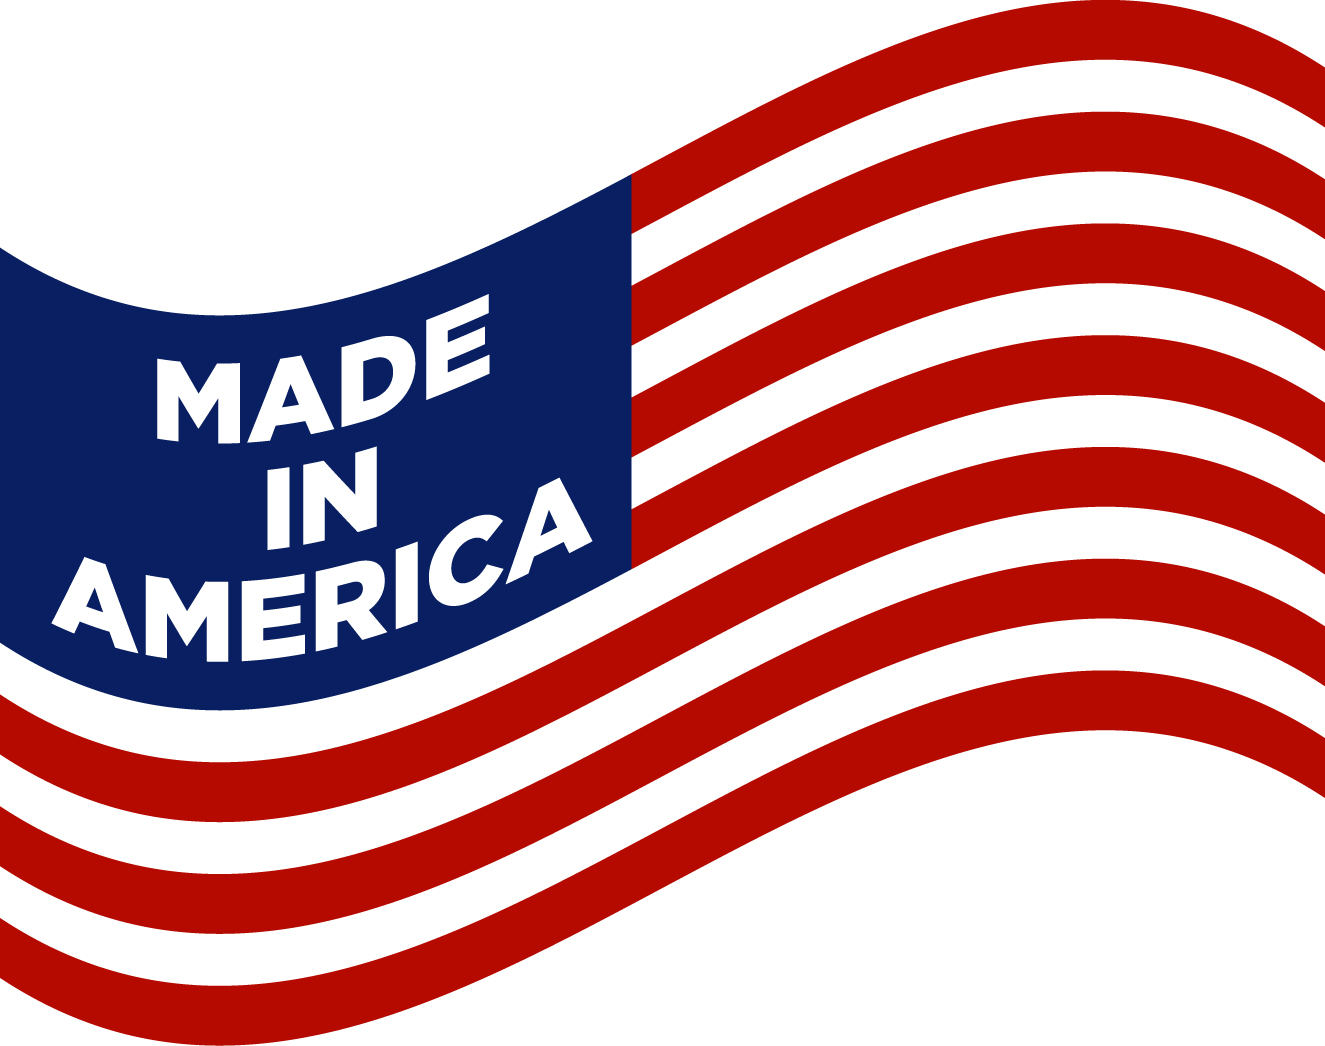 free vector clip art american flag - photo #36